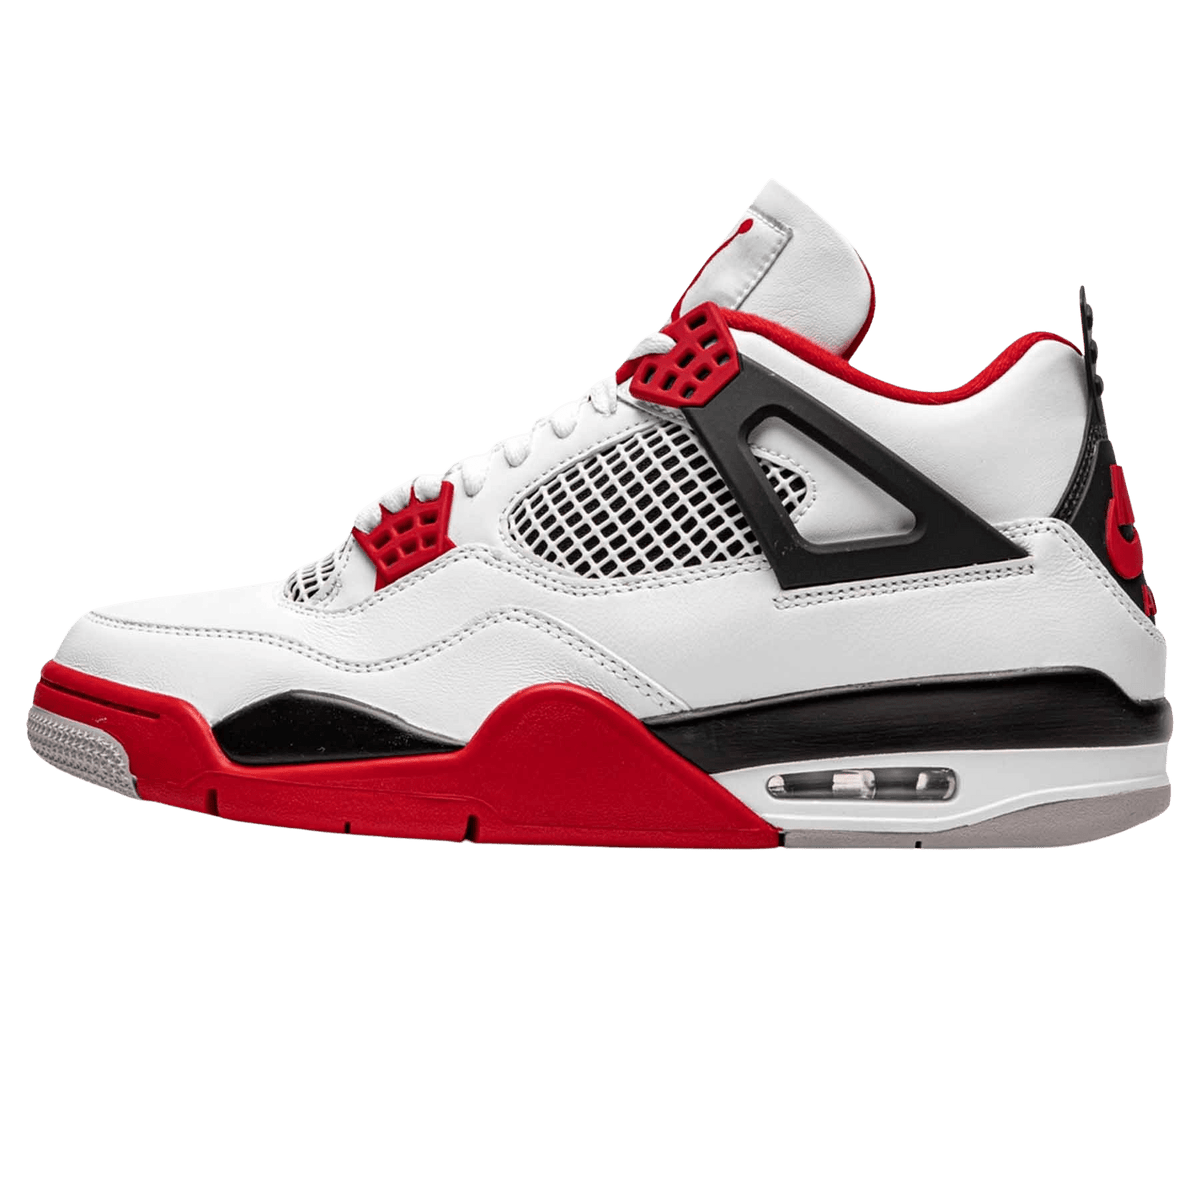 Air Jordan 4 Retro OG 'Fire Red' 2020 - Kick Game